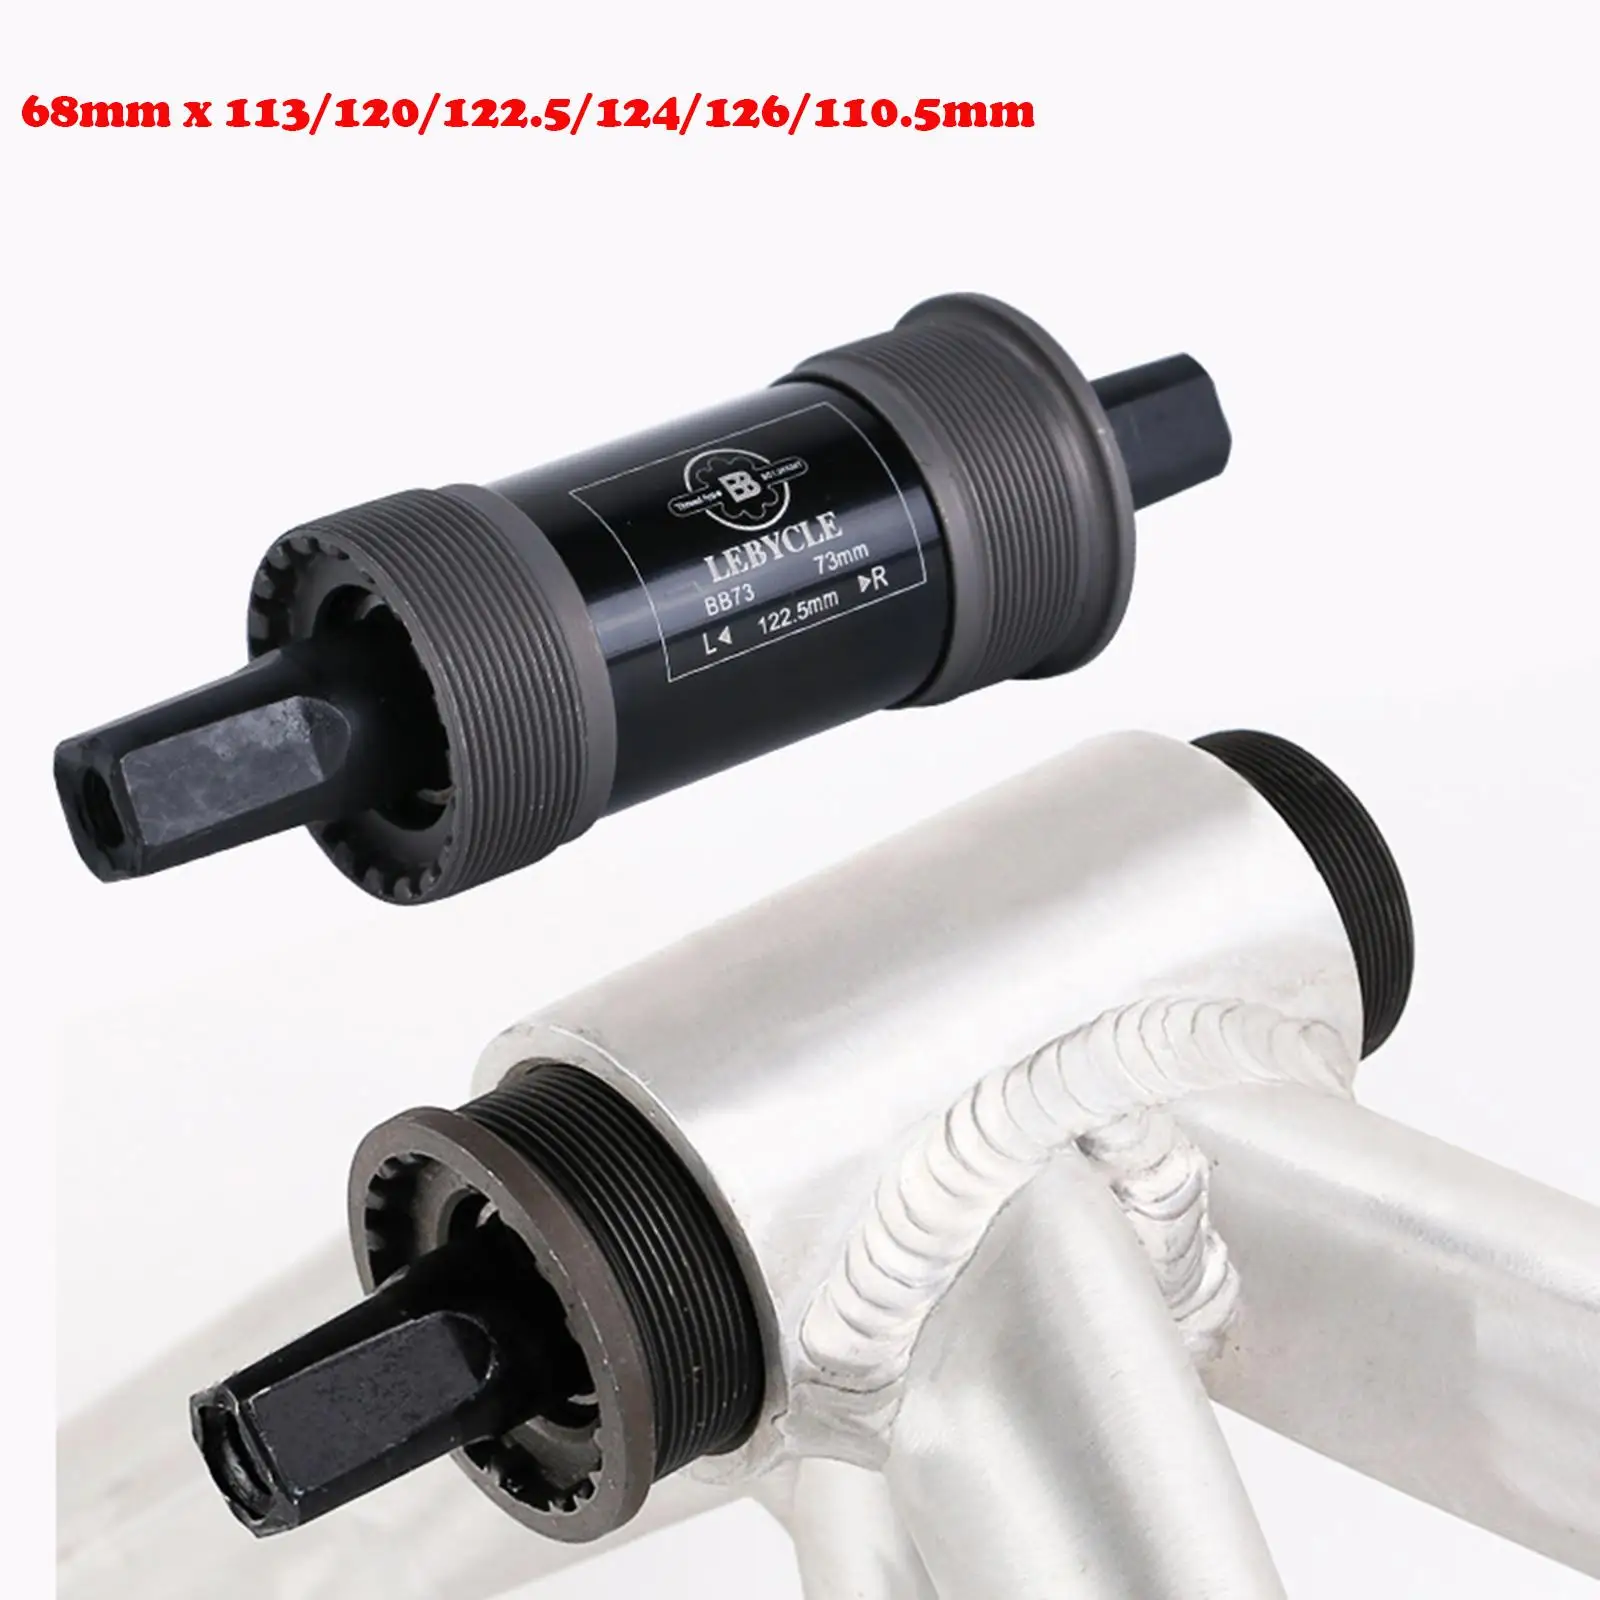 Bike Square Taper Cartridge Sealed Bearing Bottom Bracket for 68mm Frame Bicycle